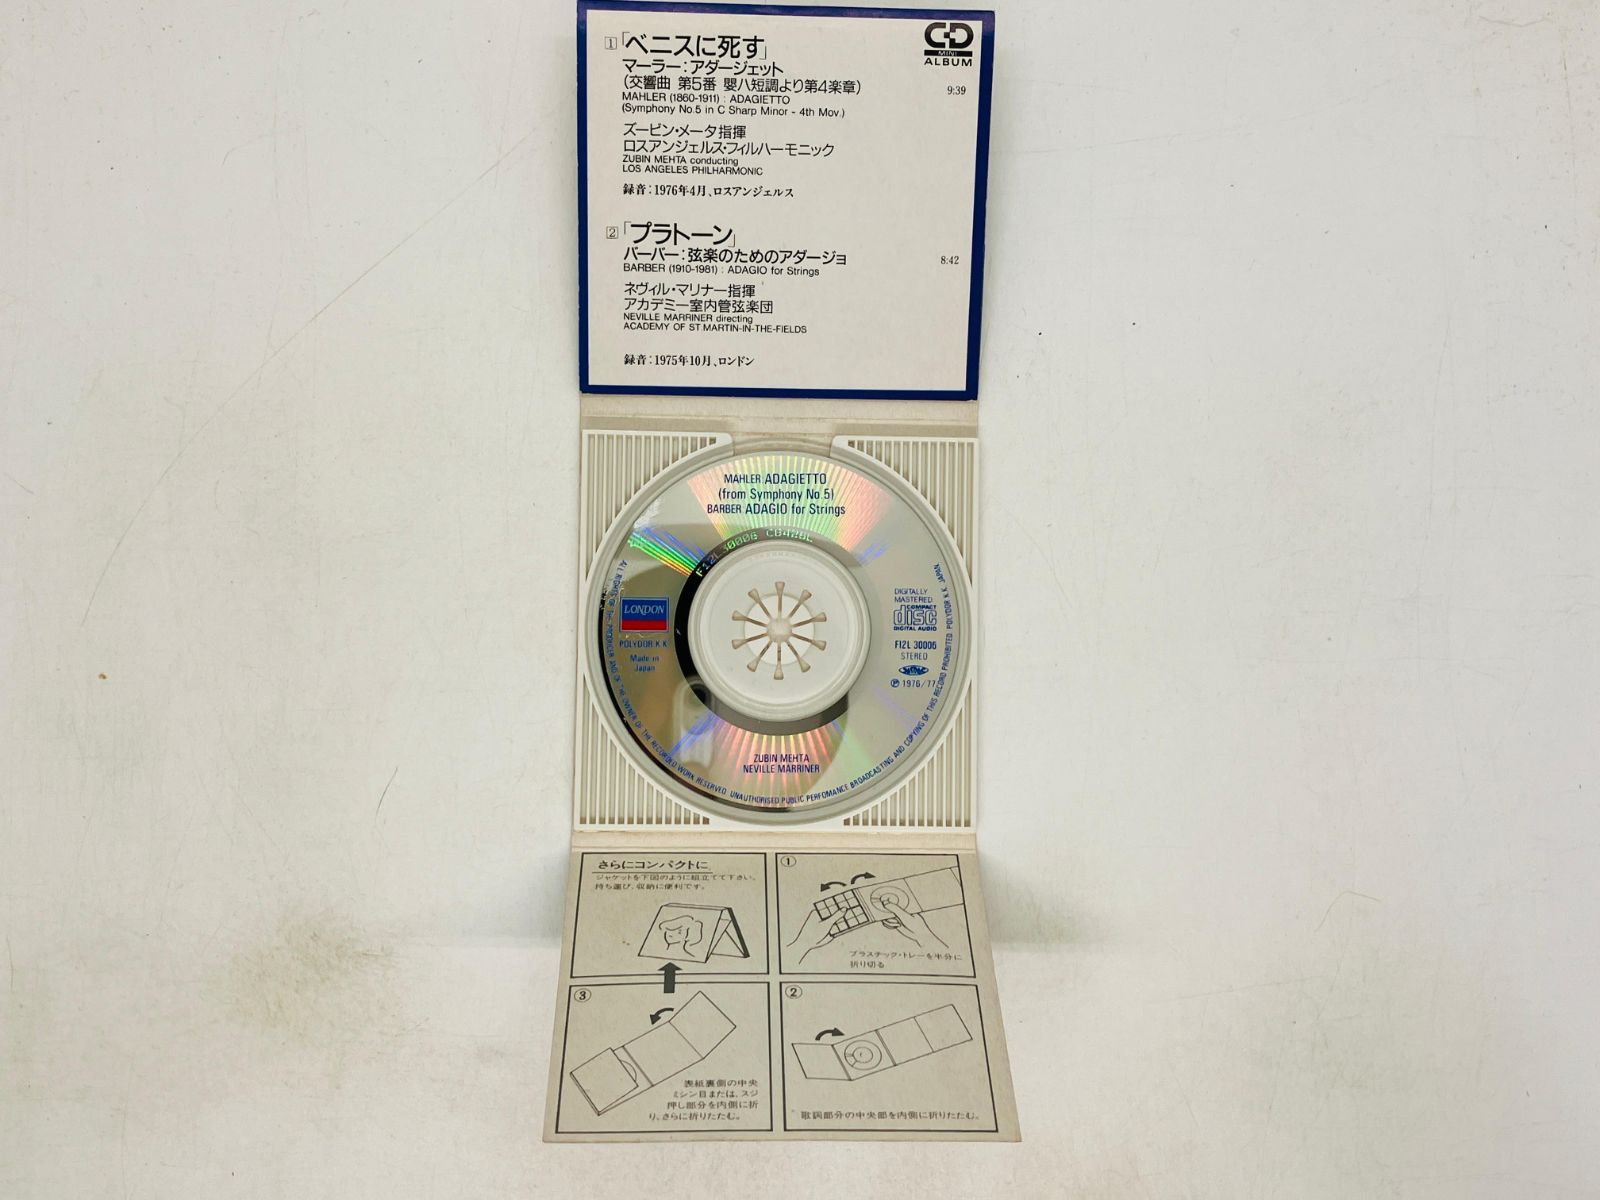 8cmCD ベニスに死す プラトーンのテーマ メータ指揮 マリナー指揮 クラシック アルバム R01 - TOTAL CD SHOP - メルカリ